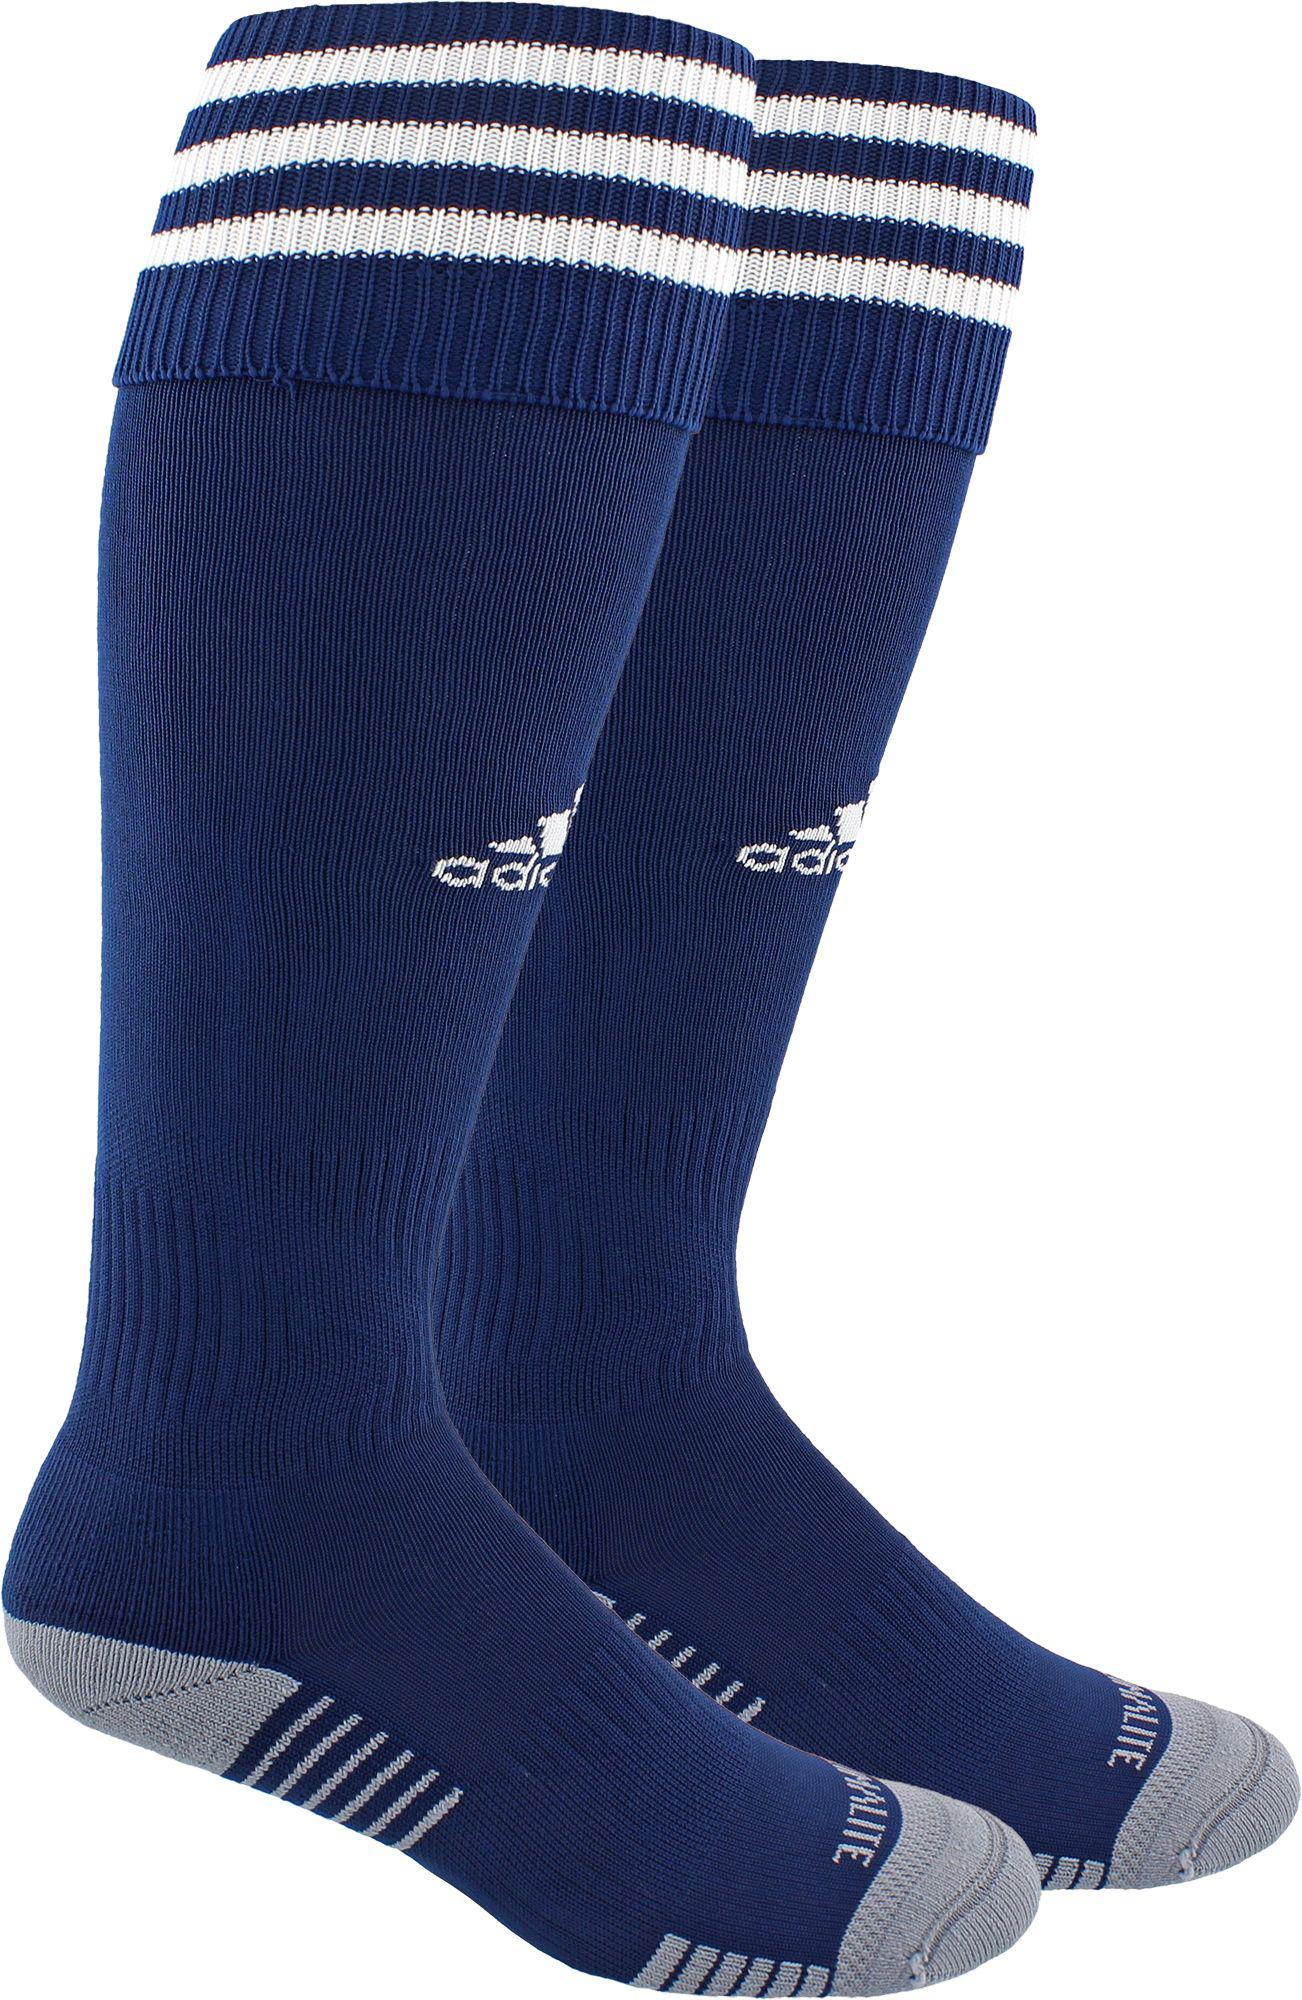 Lyst - Adidas Copa Zone Cushion Iii Soccer Socks in Blue for Men